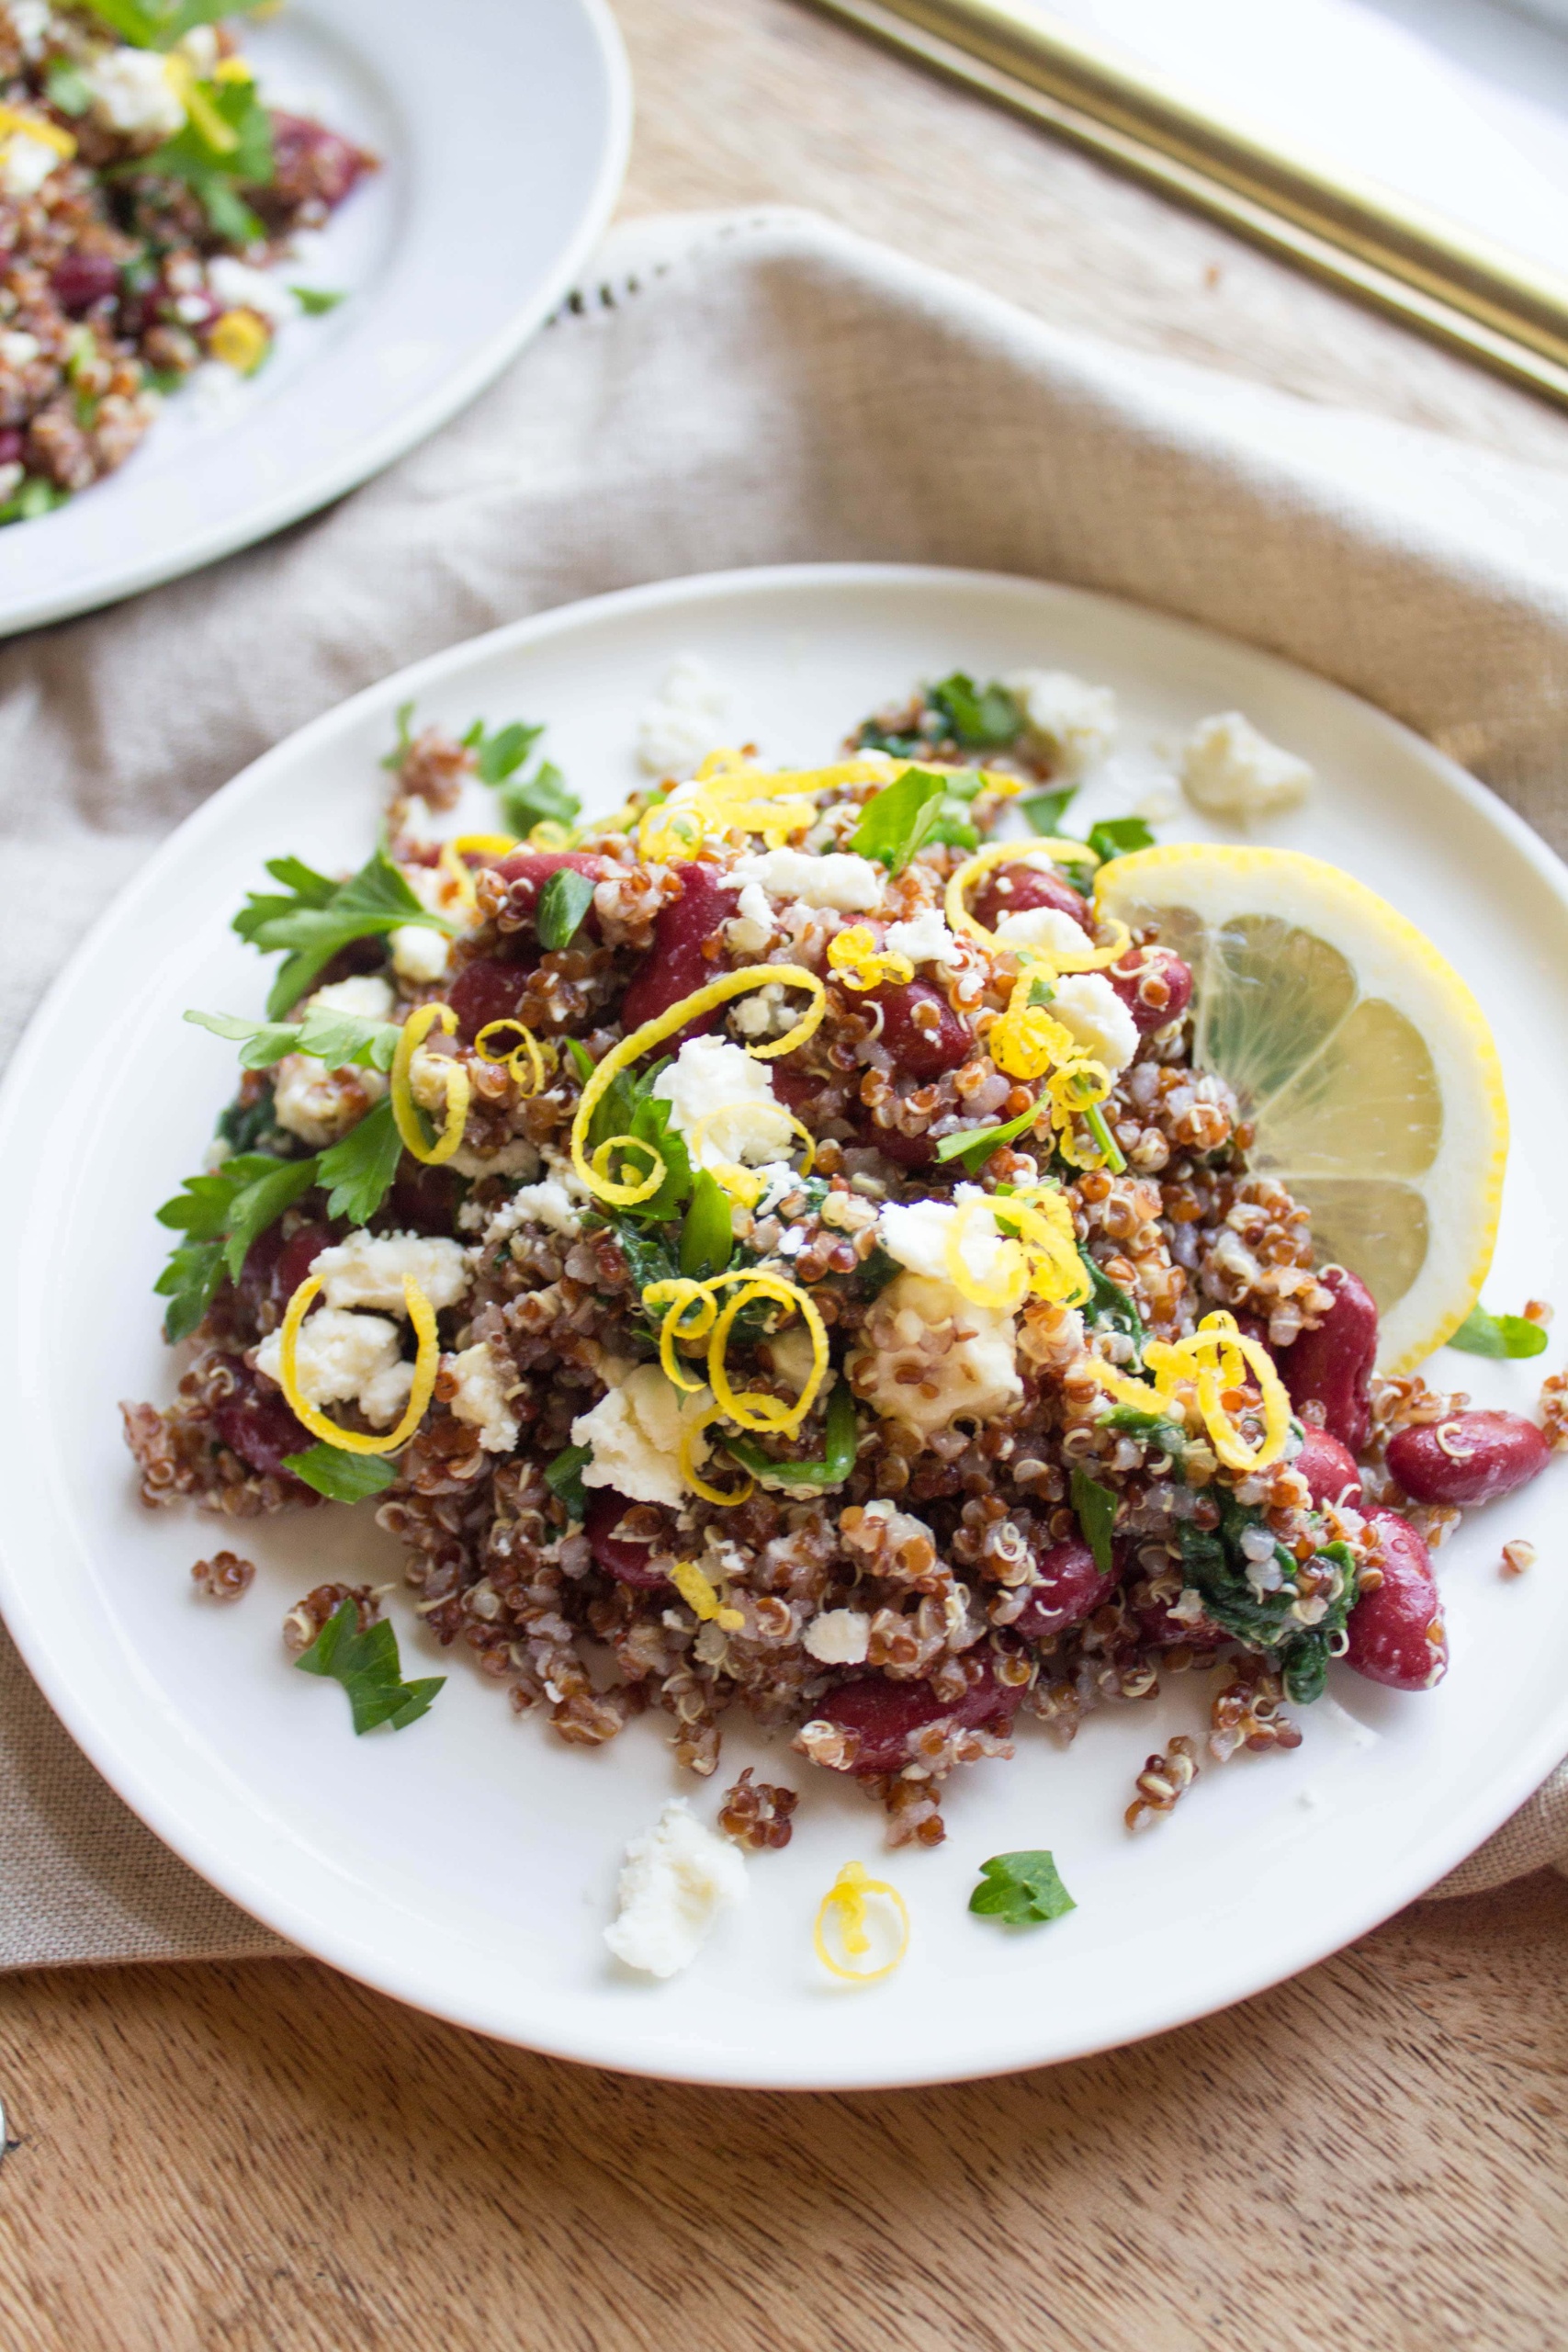 https://www.fannetasticfood.com/wp-content/uploads/2011/05/spinach-quinoa-salad-1-scaled.jpg